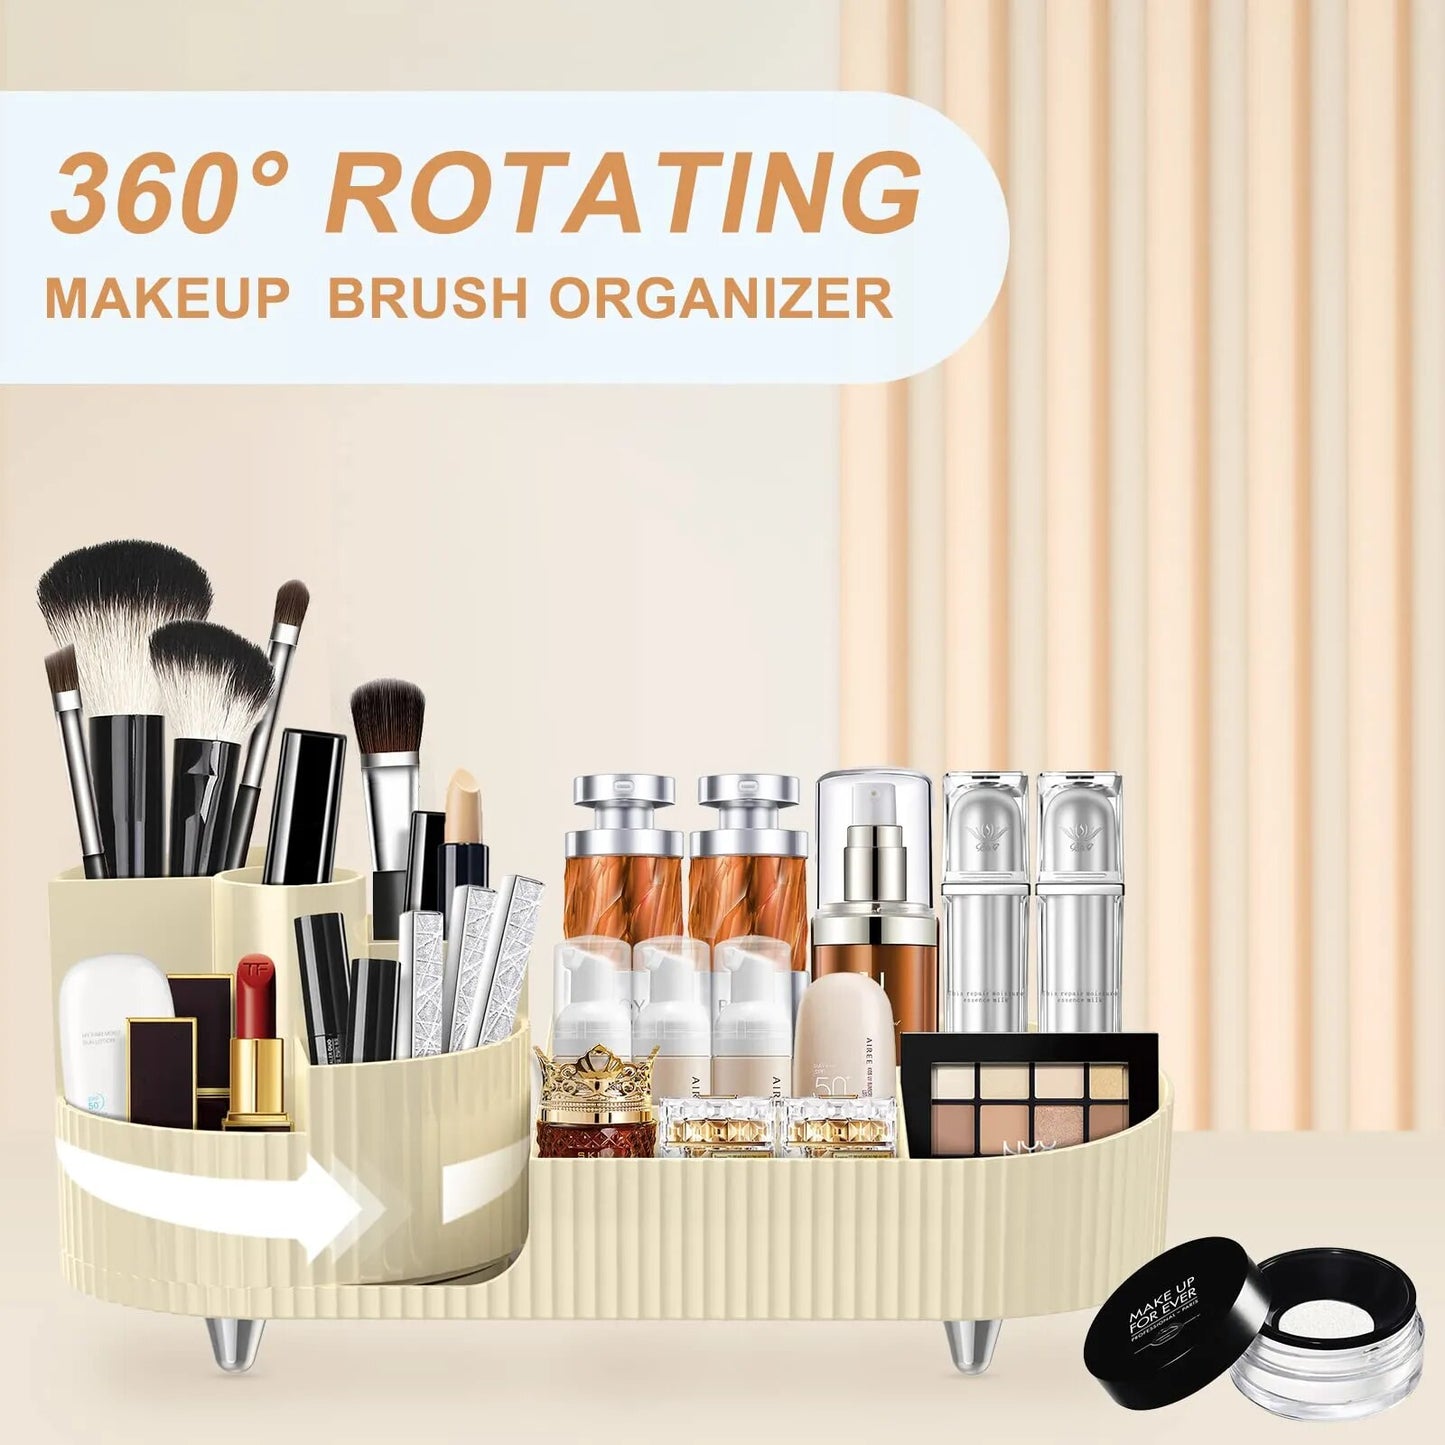 360° Rotating Makeup Organizer  Brush Holder